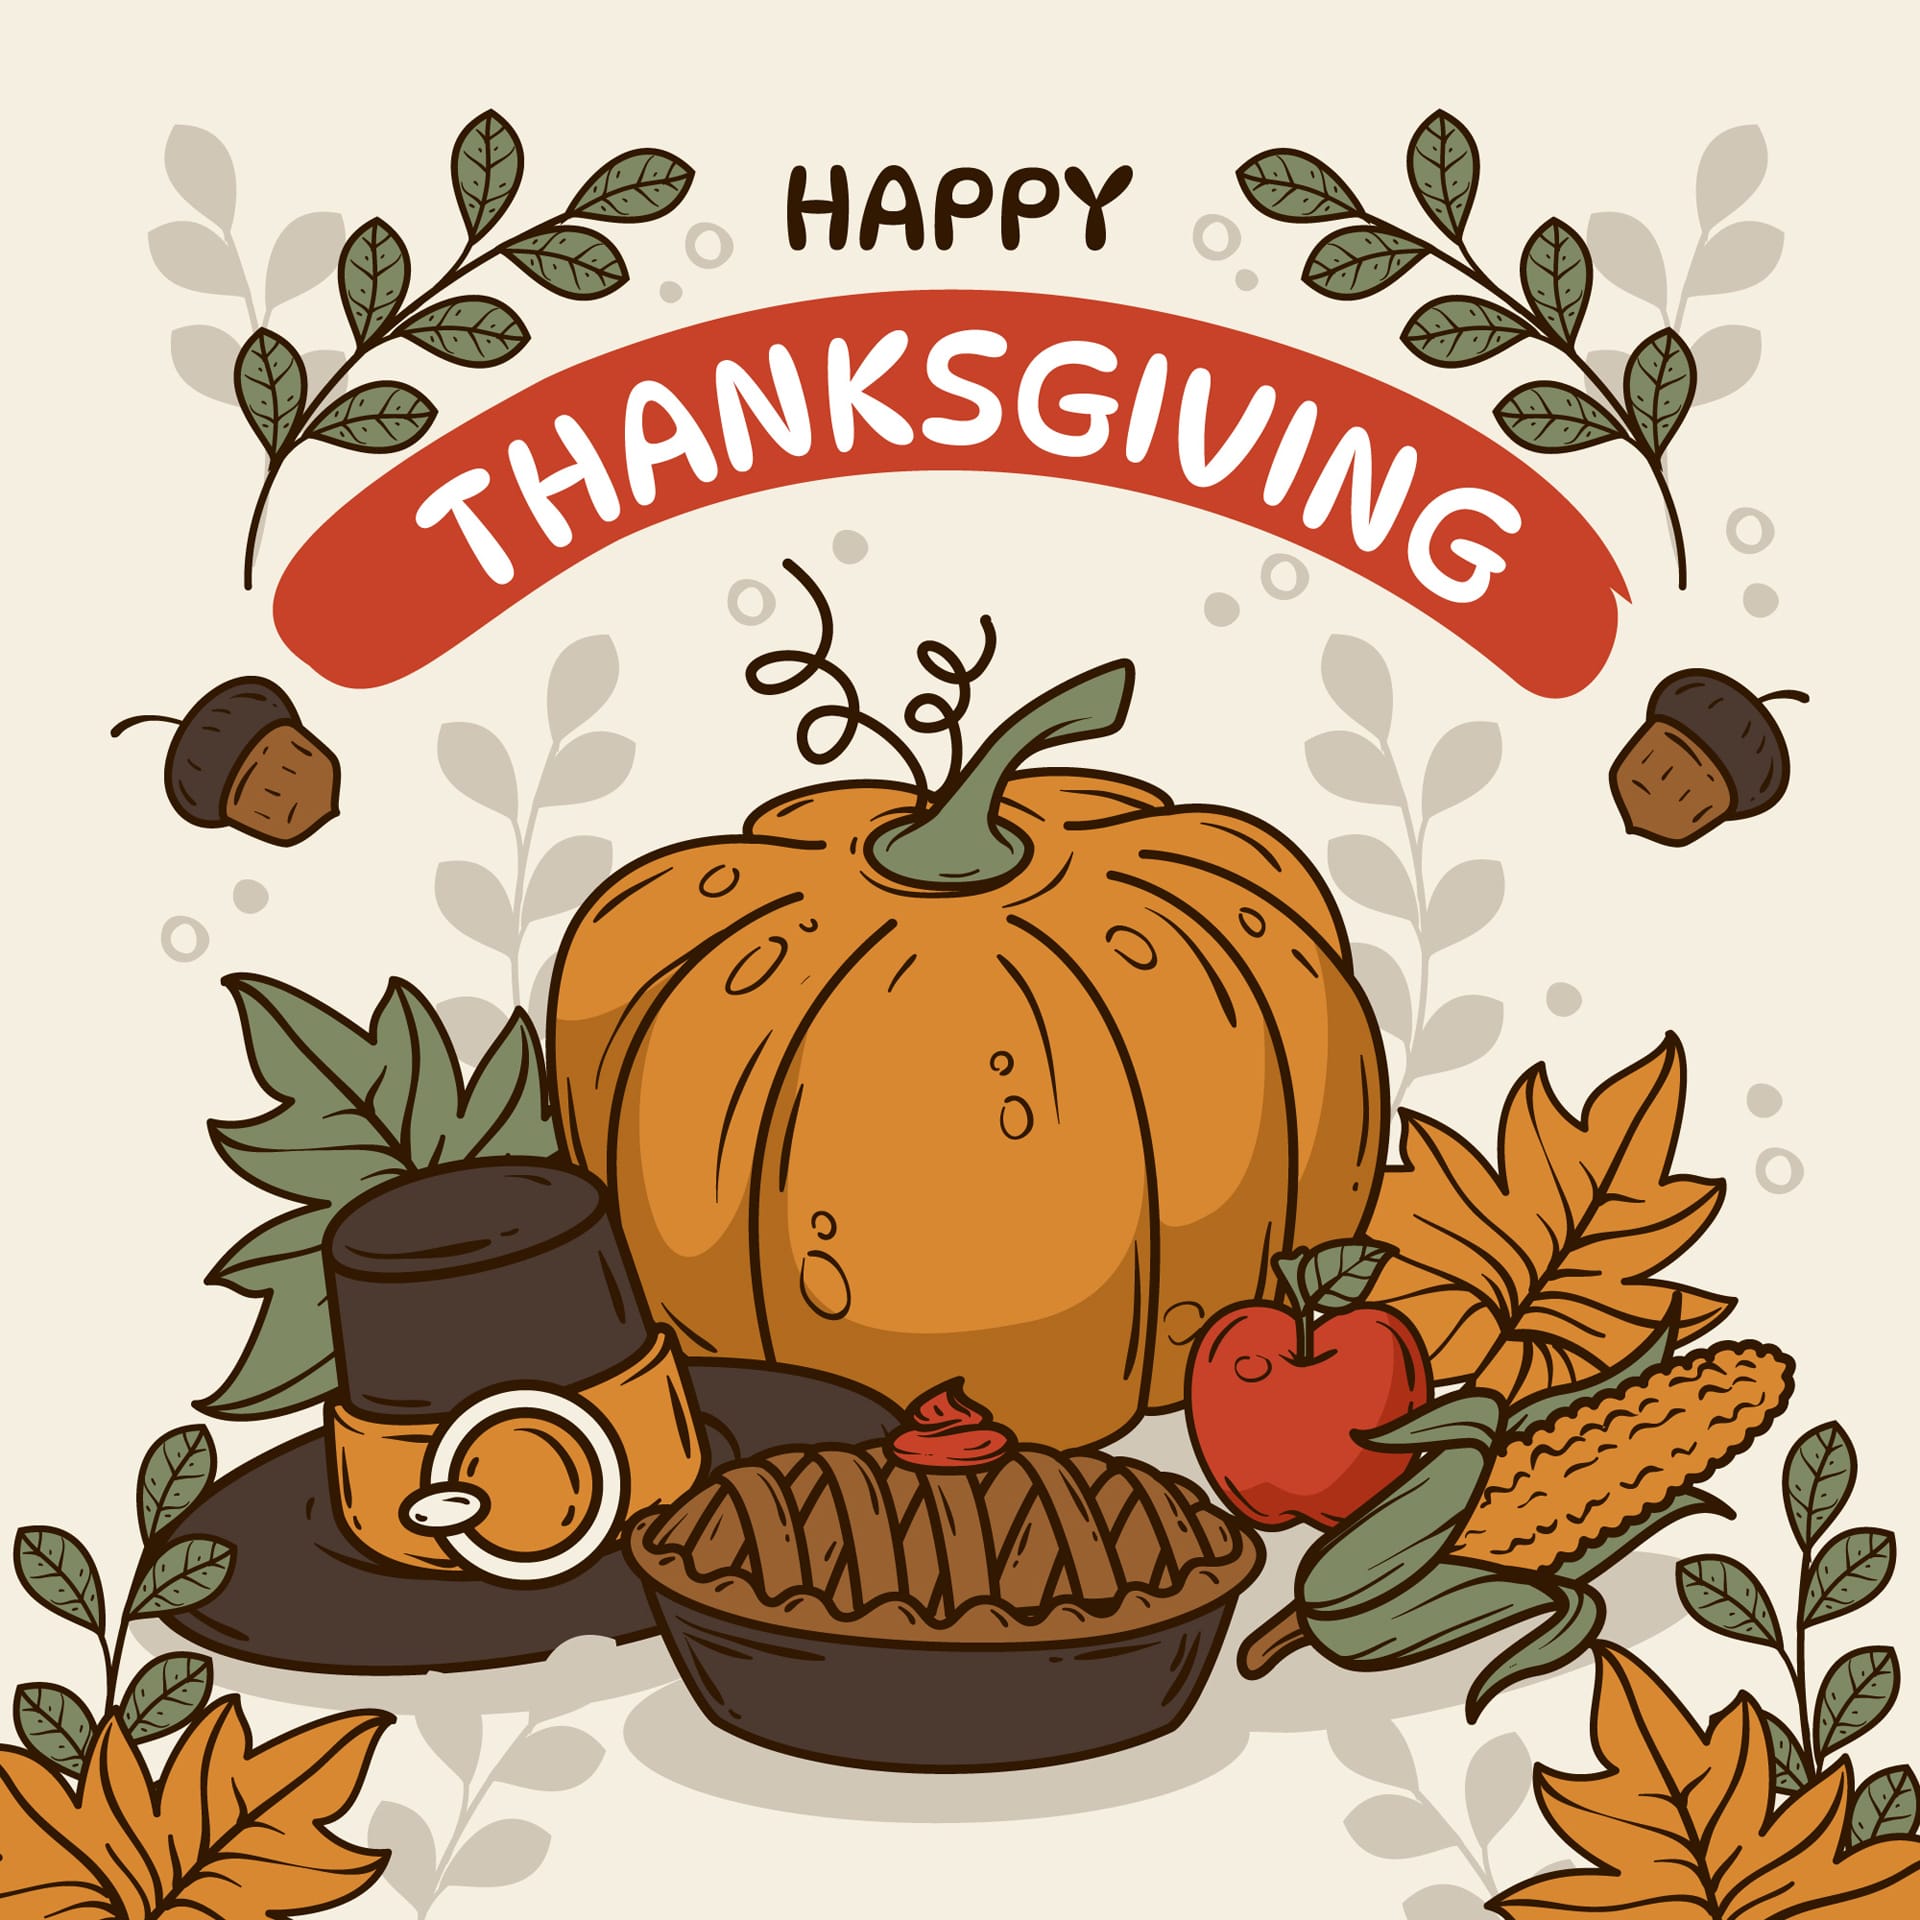 Hand drawn thanksgiving celebration illustration image